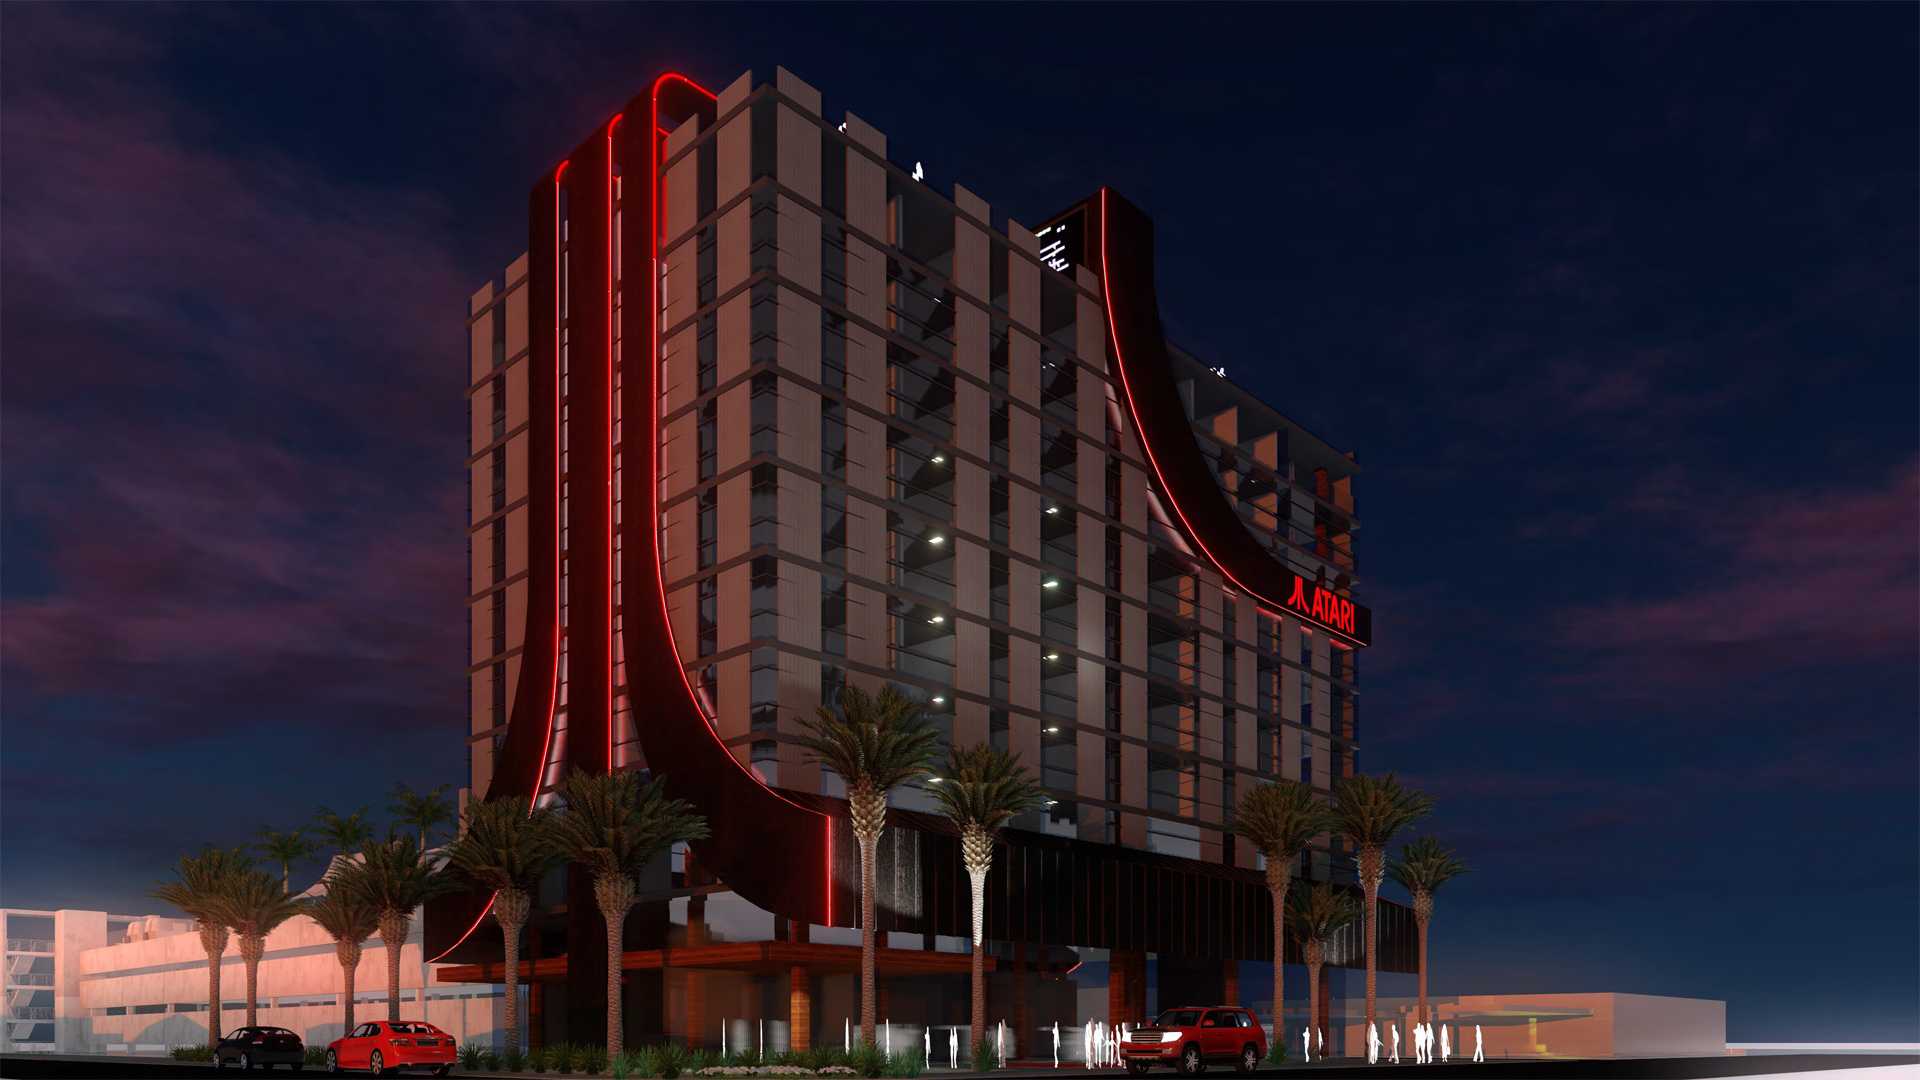 A future Atari hotel is depicted.